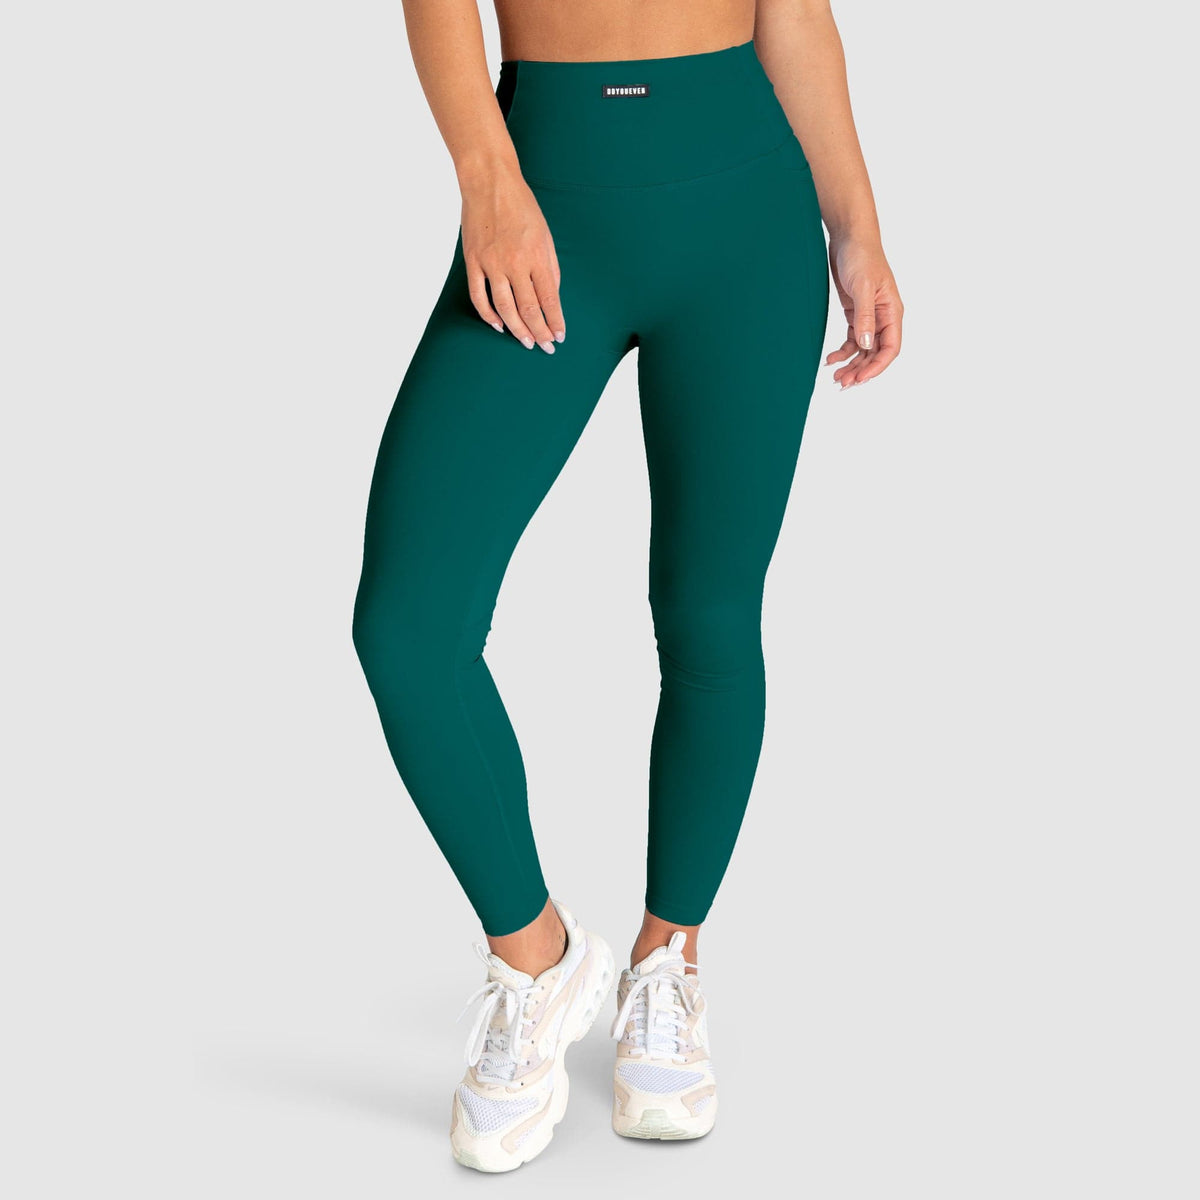 EHQJNJ Yoga Pants Women's Paddystripes Good Luck Green Pants Print